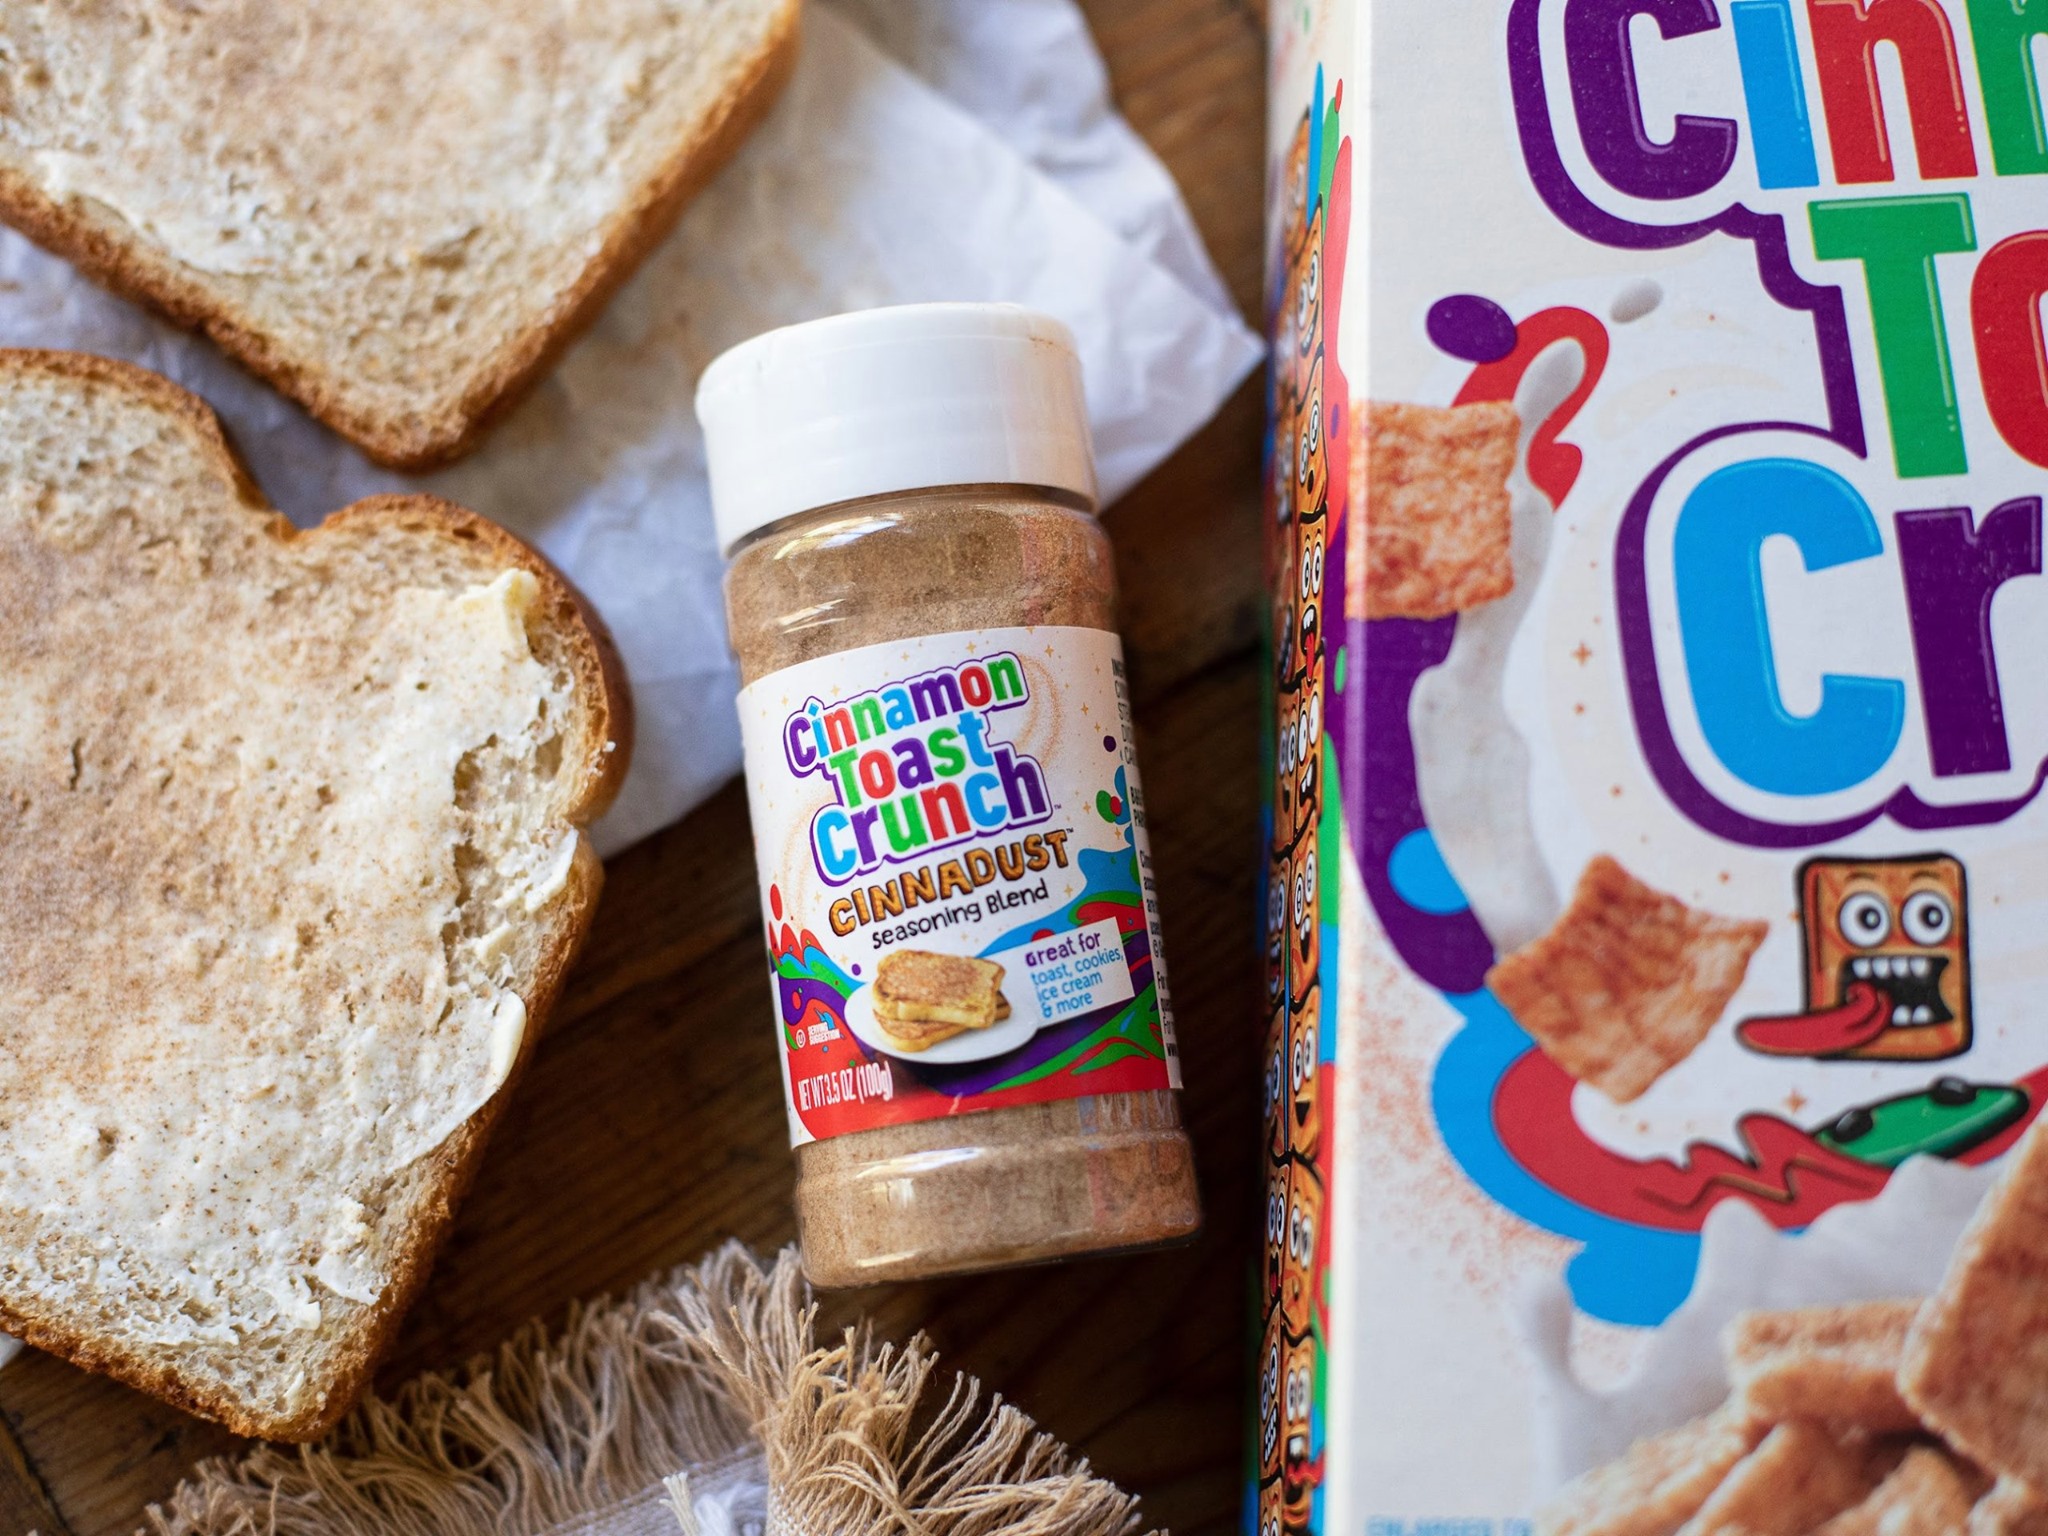 Cinnamon Toast Crunch Cinnadust Is Half Price At Publix